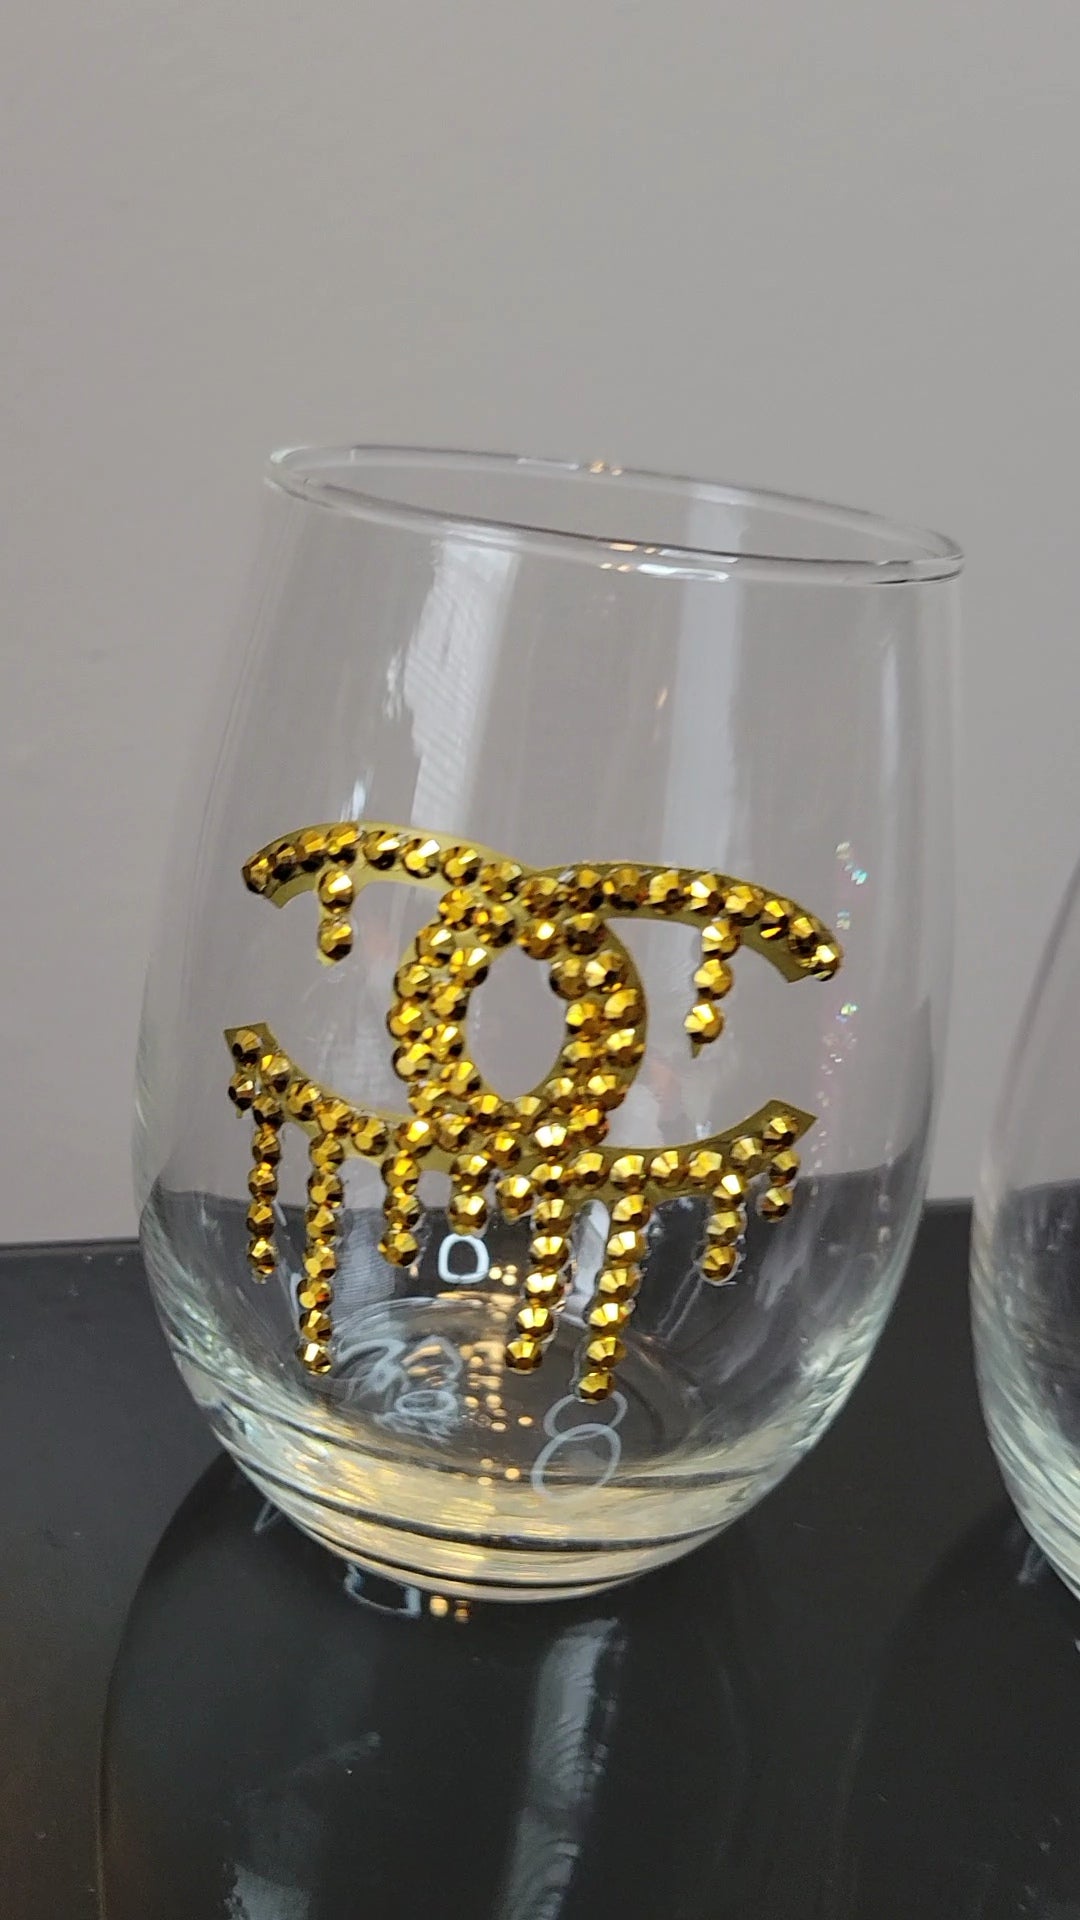 chanel wine glasses